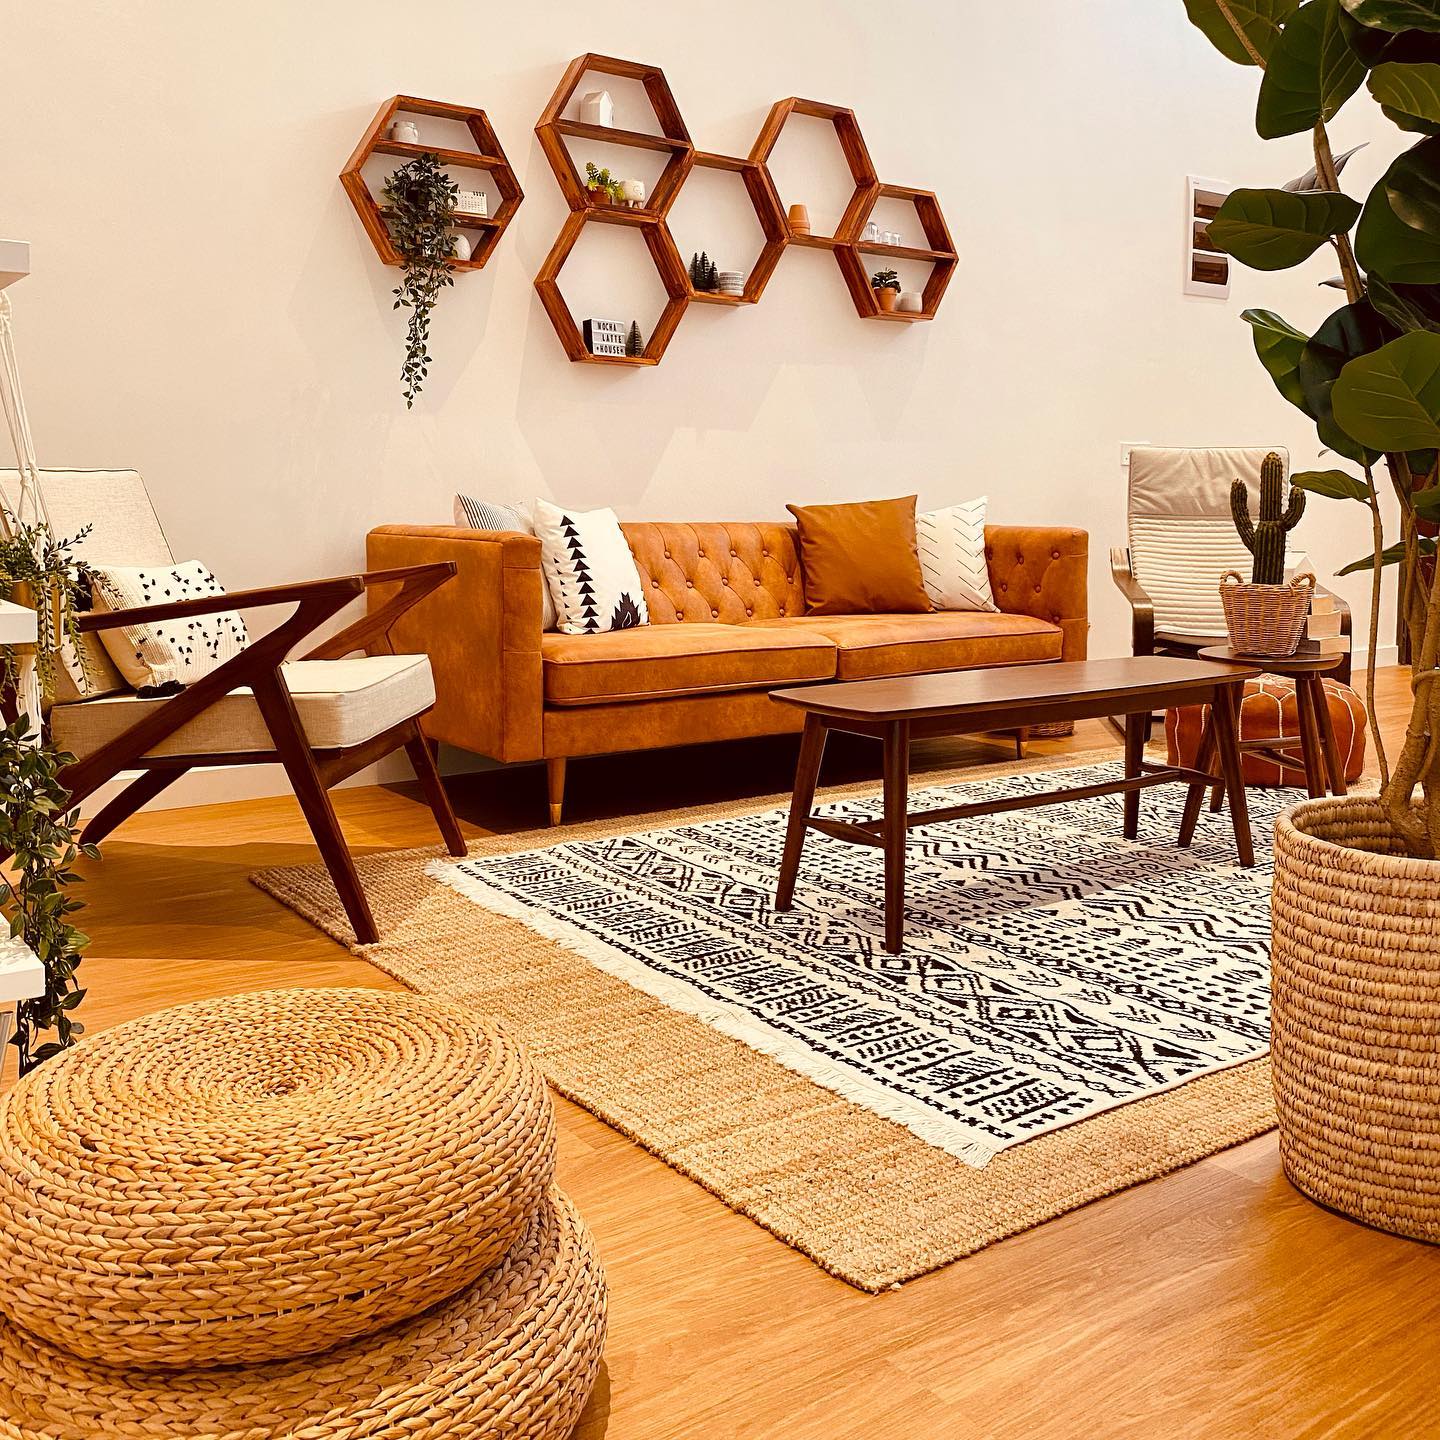 Malaysian Based Midcentury Modern Living Room